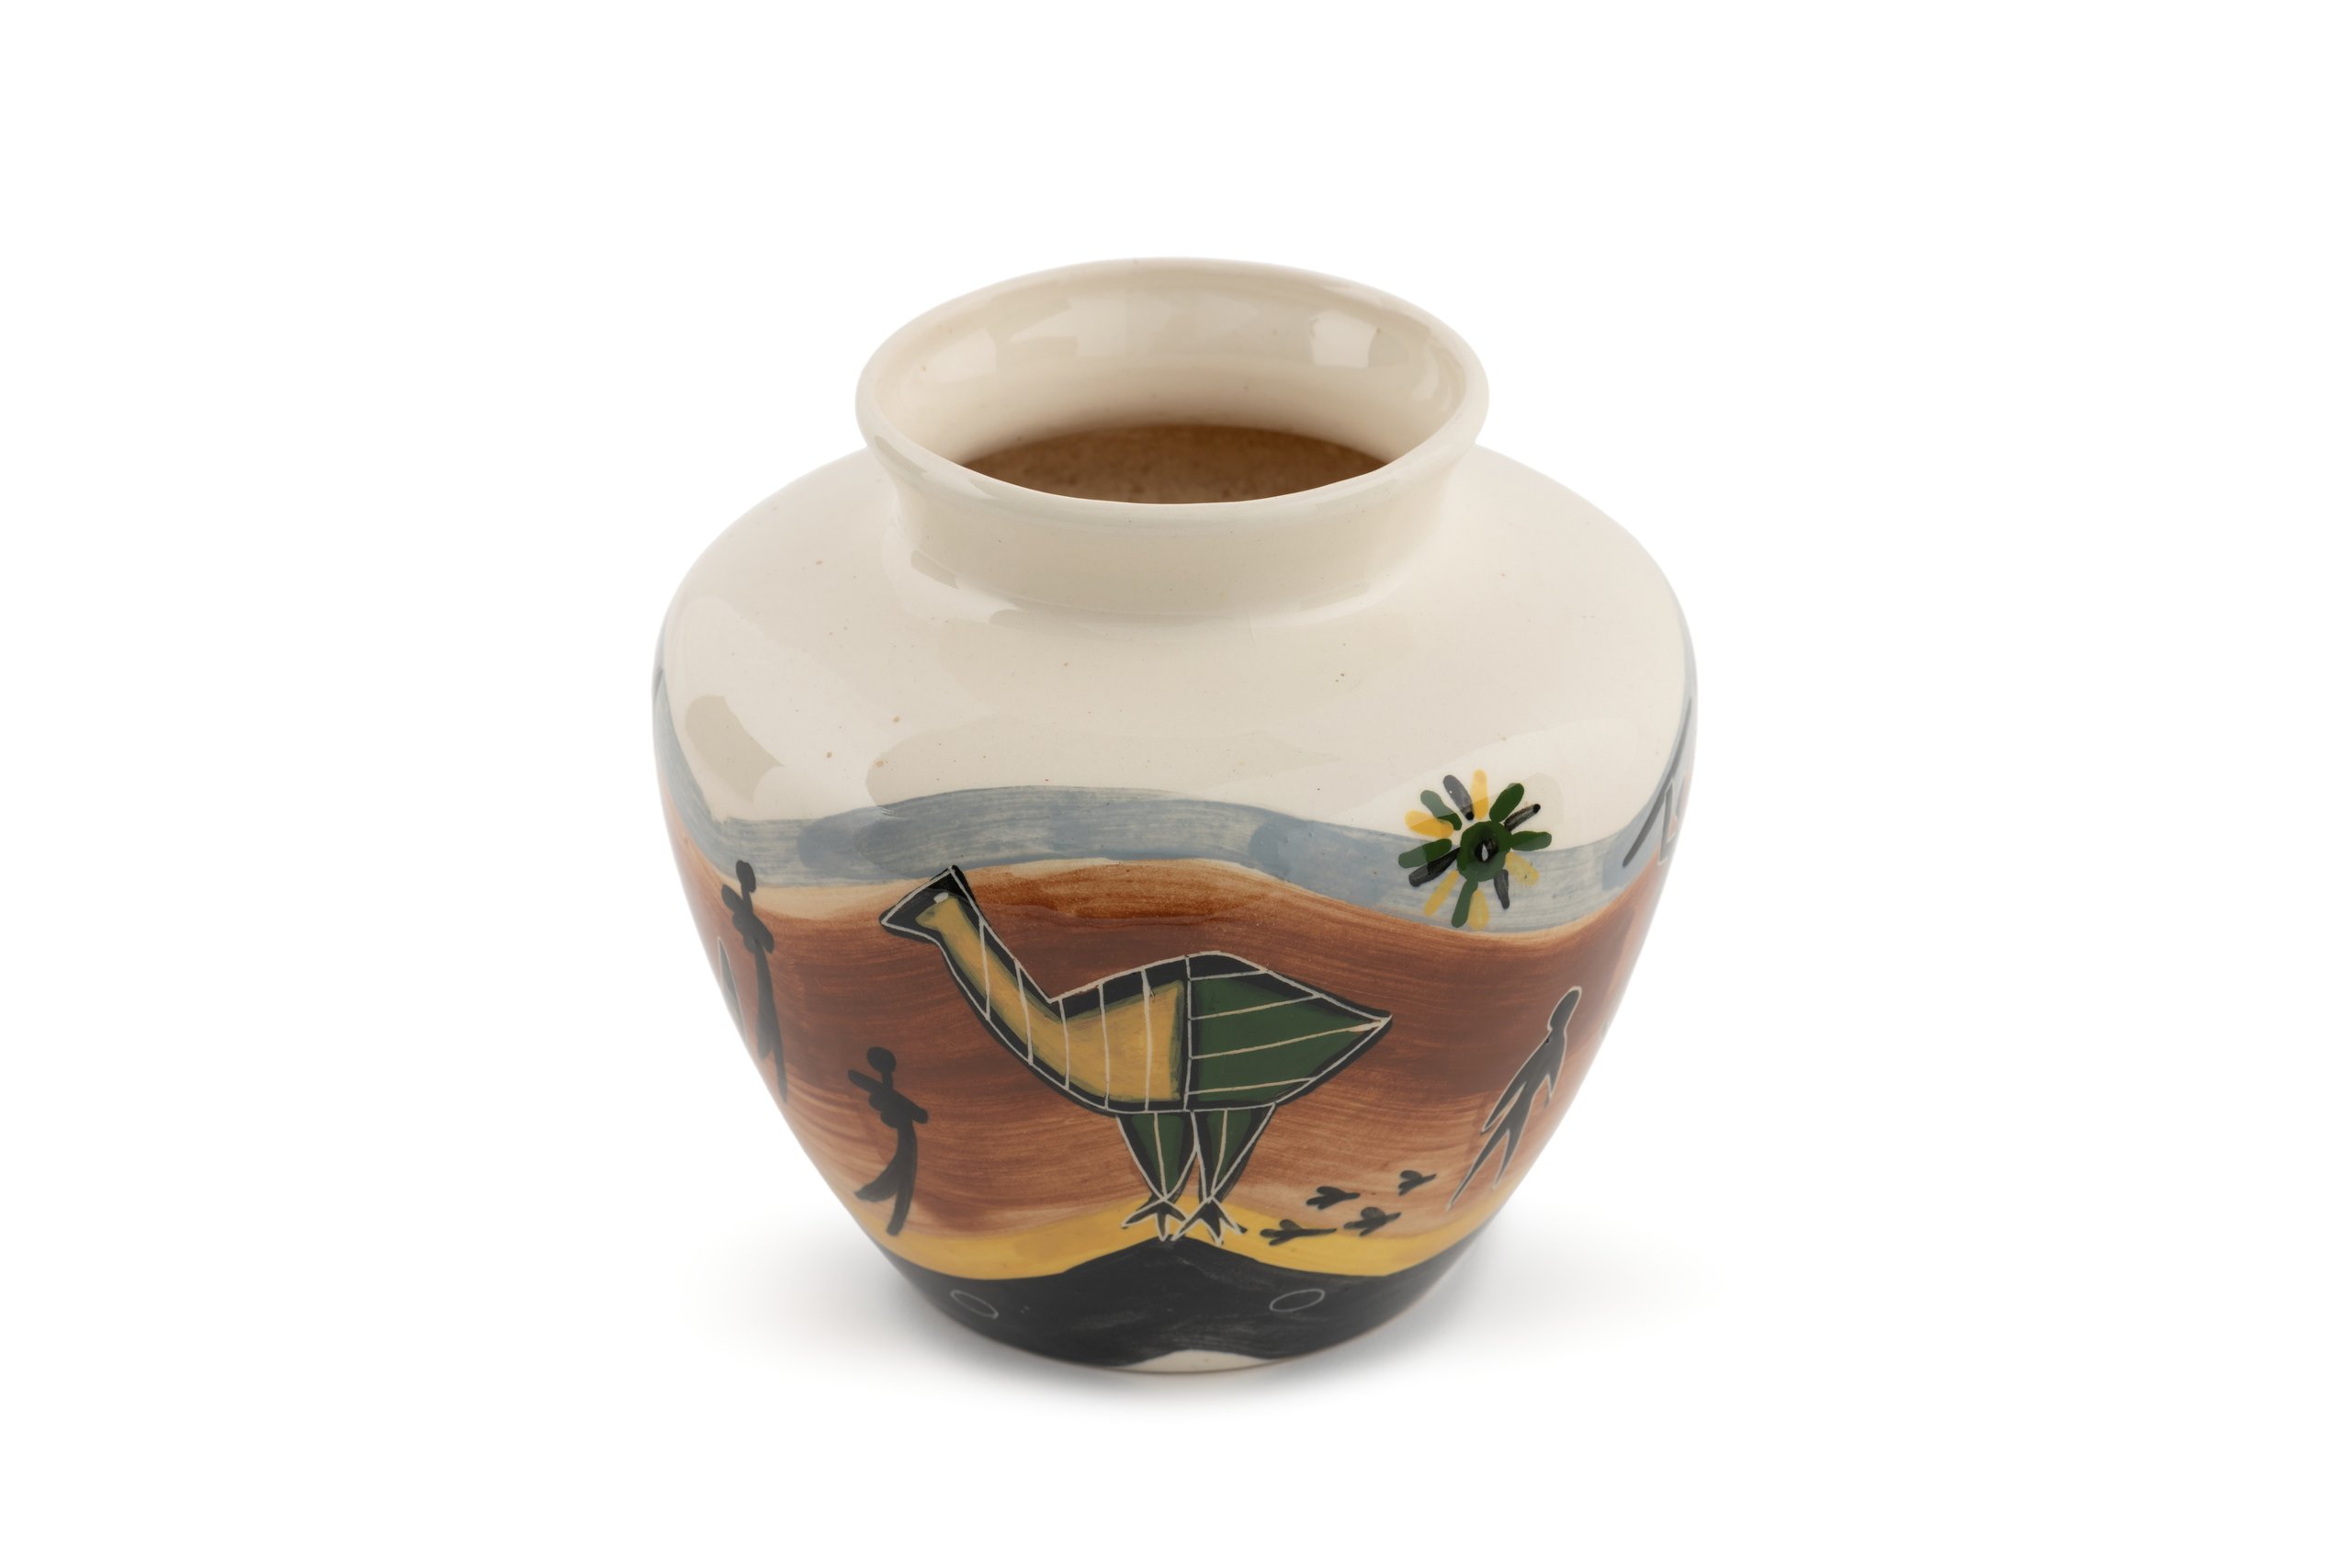 Earthenware vase by Nixon Pottery